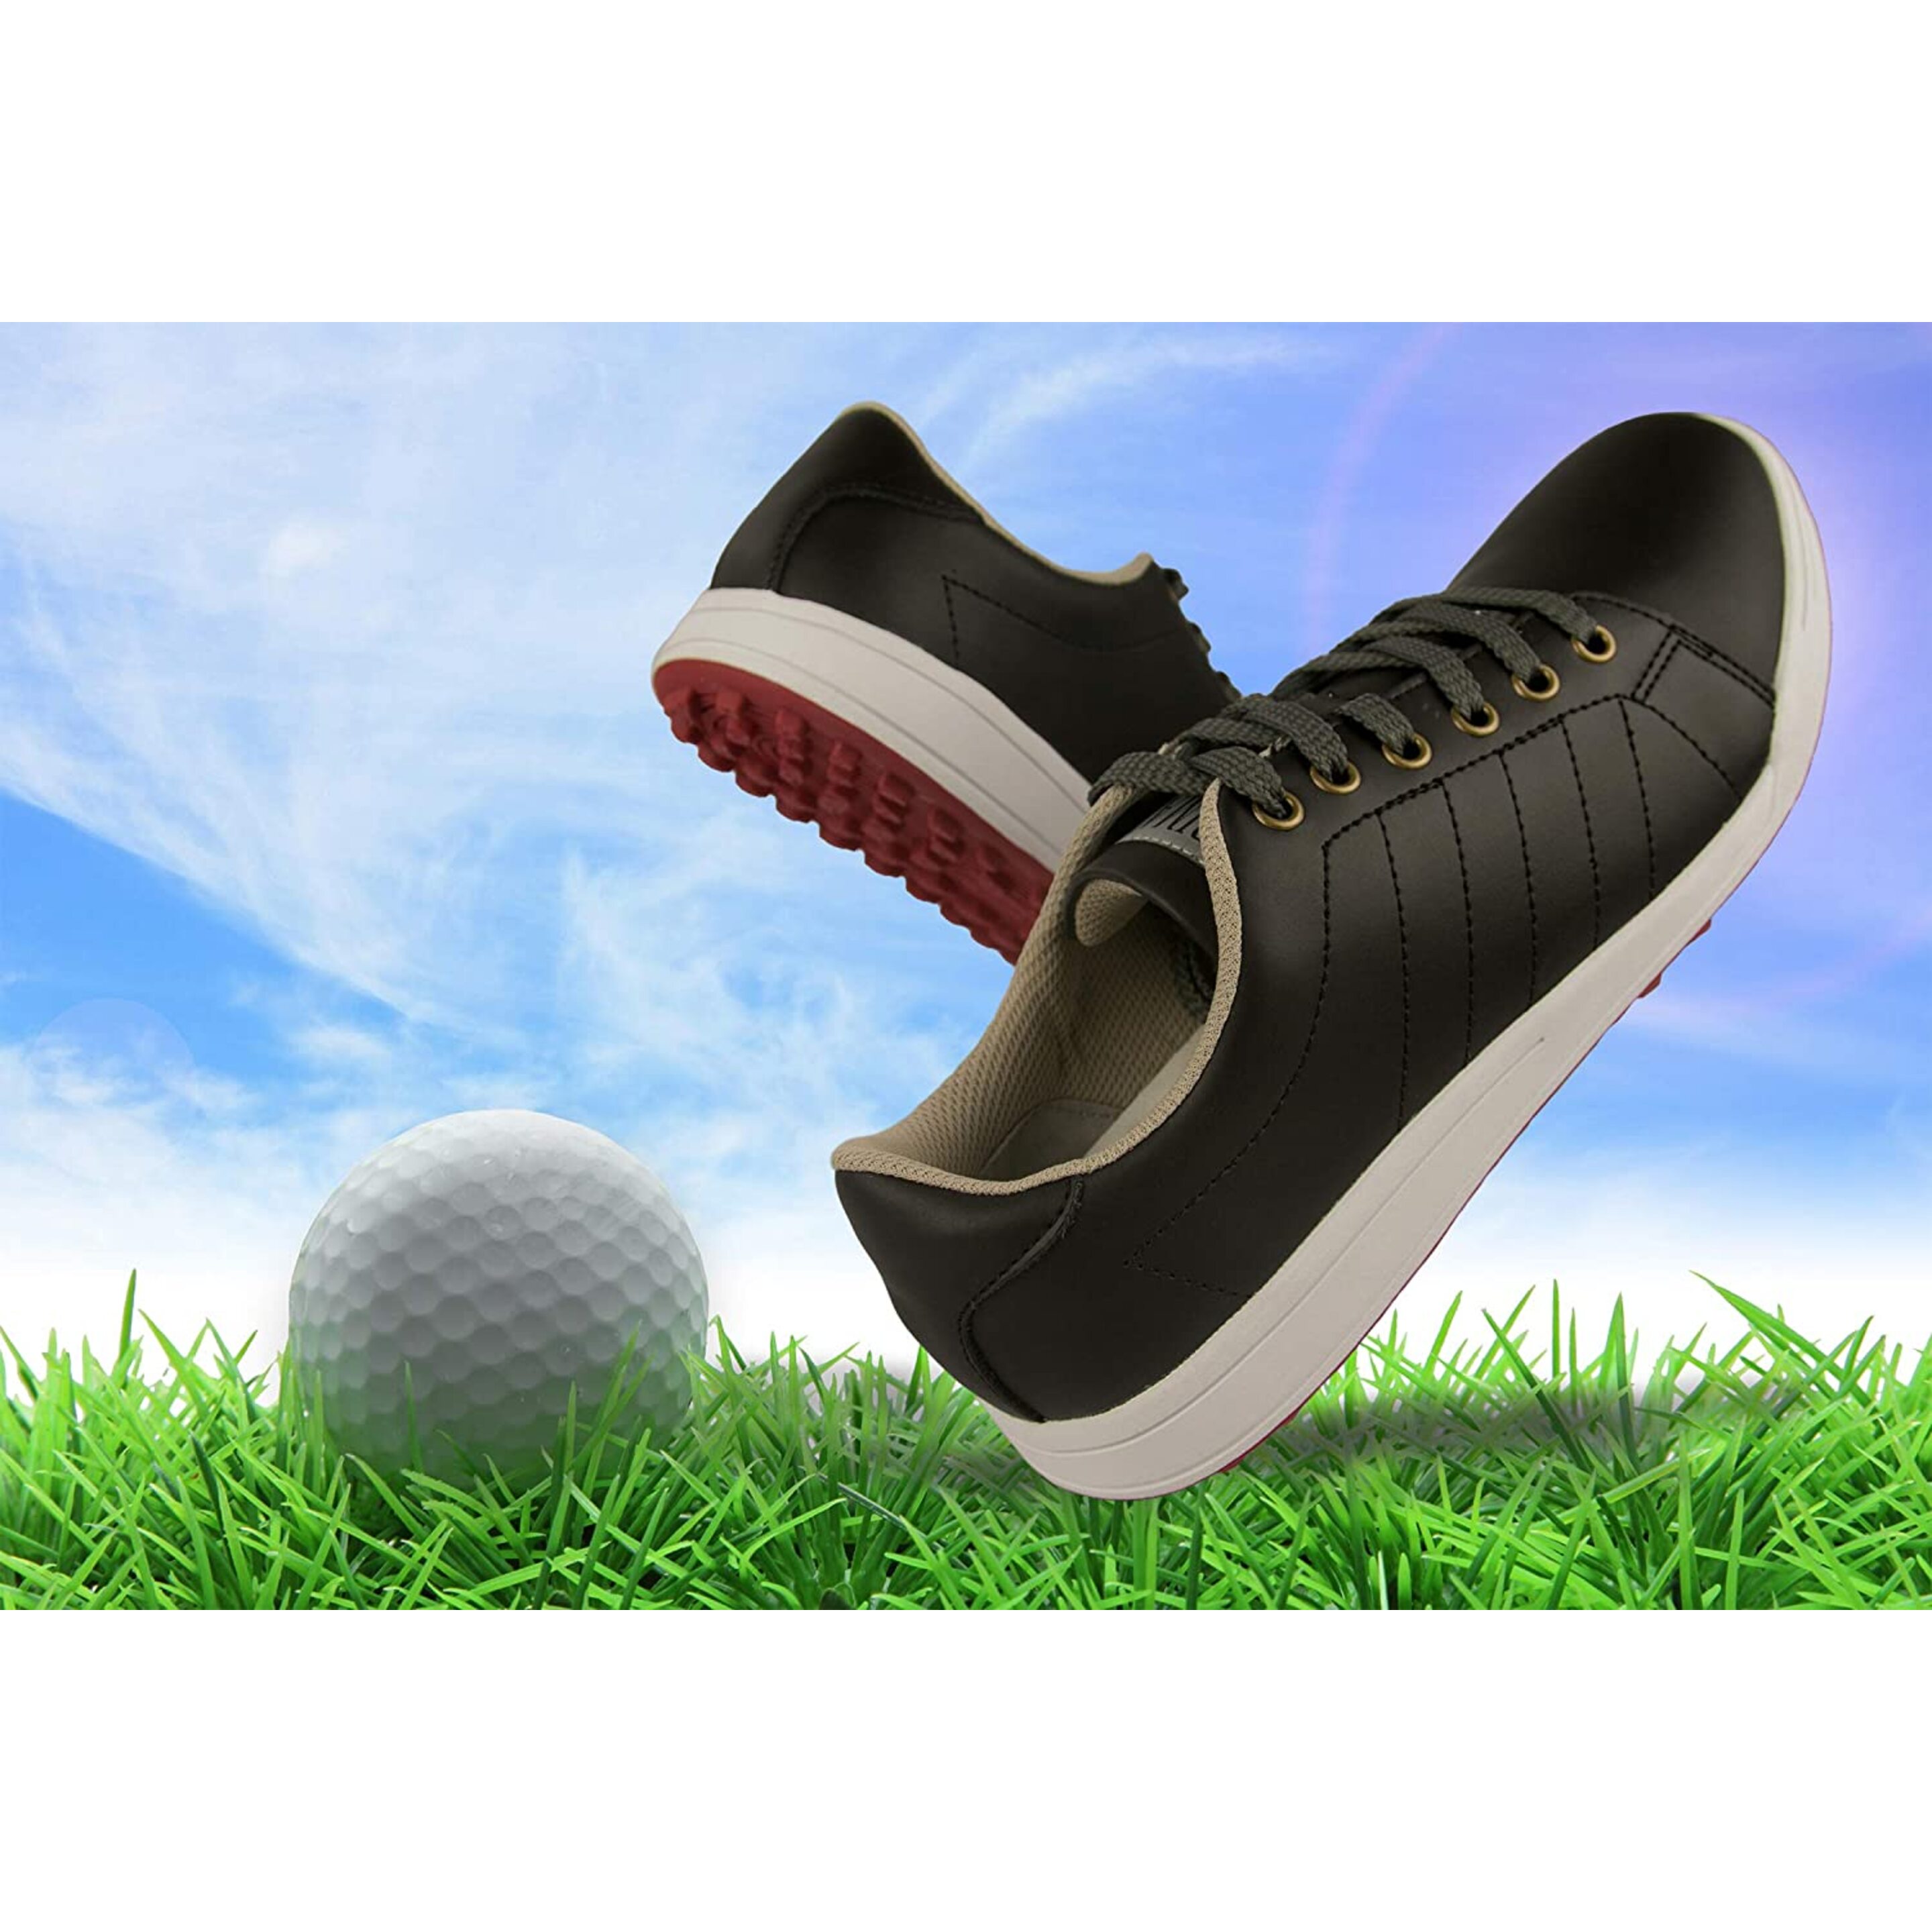 Zerimar Zapatos De Golf Hombre |zapatos Golf Piel | Zapatos Hombre Deportivos | Zapatillas De Golf - negro  MKP